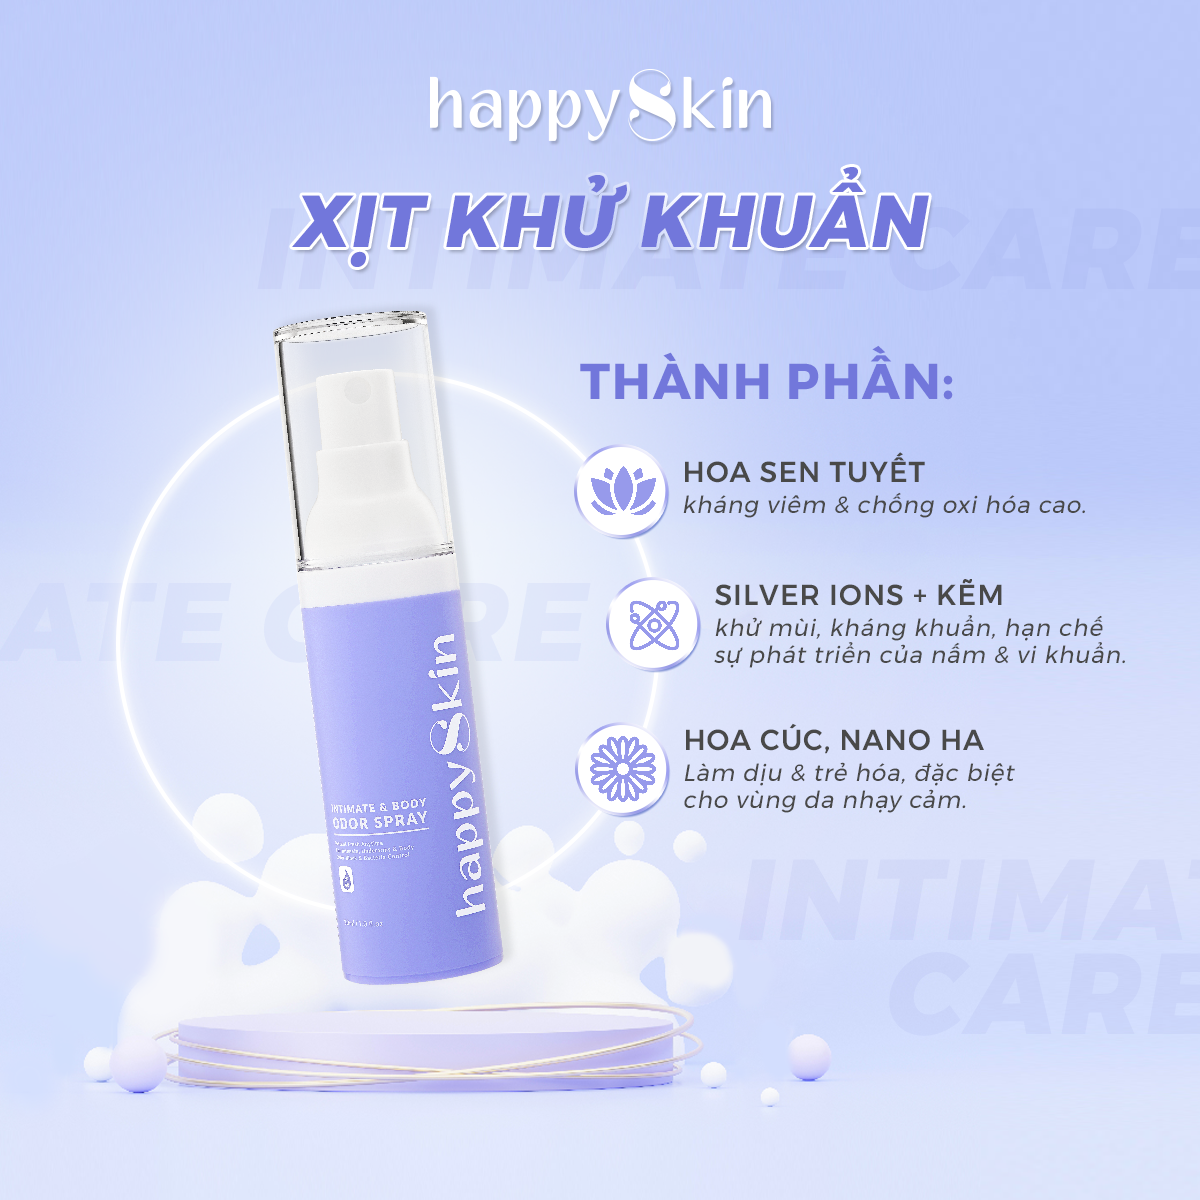 emmie-by-happyskin-xit-khu-mui-vung-kin-toan-than-happyskin-intimate-body-odor-spray-2